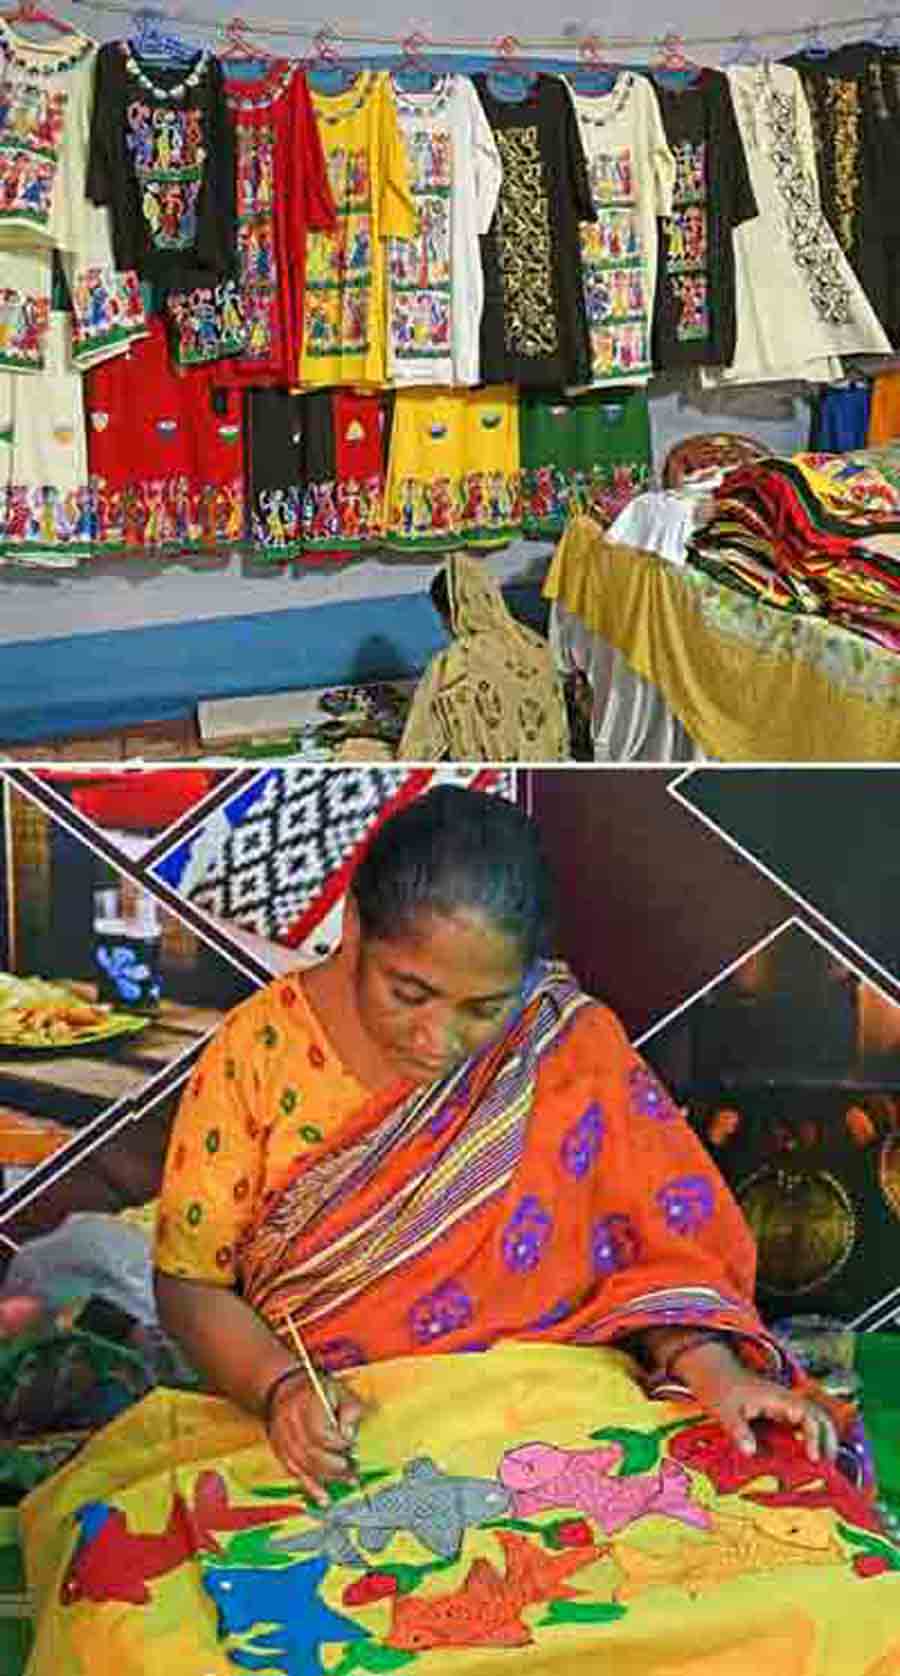 Patachitra kurtas on display and an artist painting patachitra on a sari